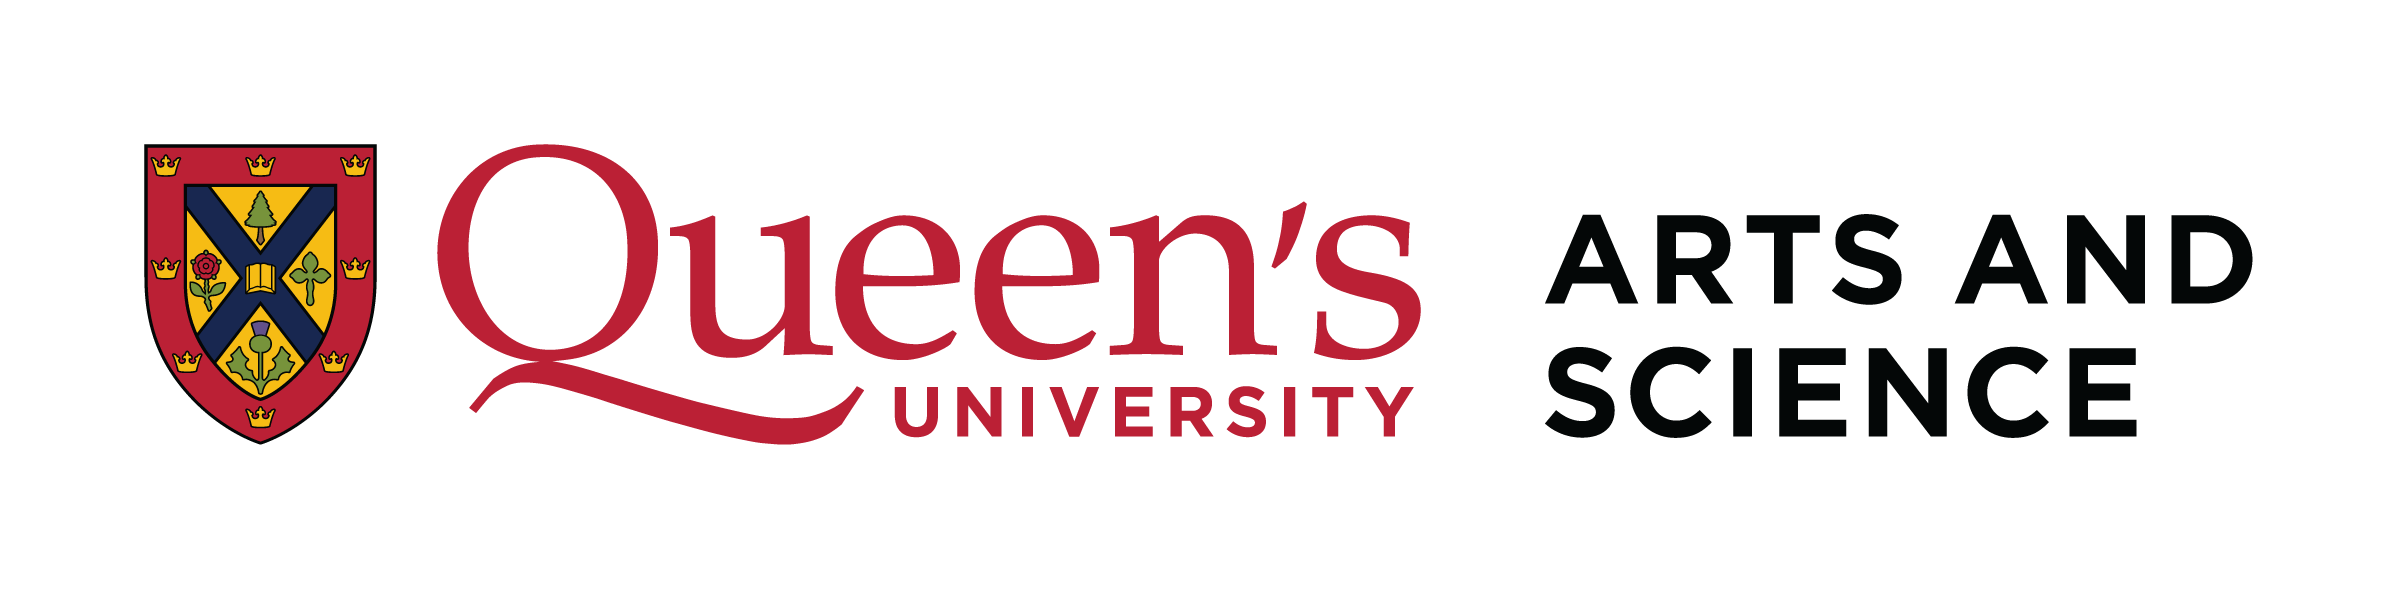 Queen's University Arts and Science